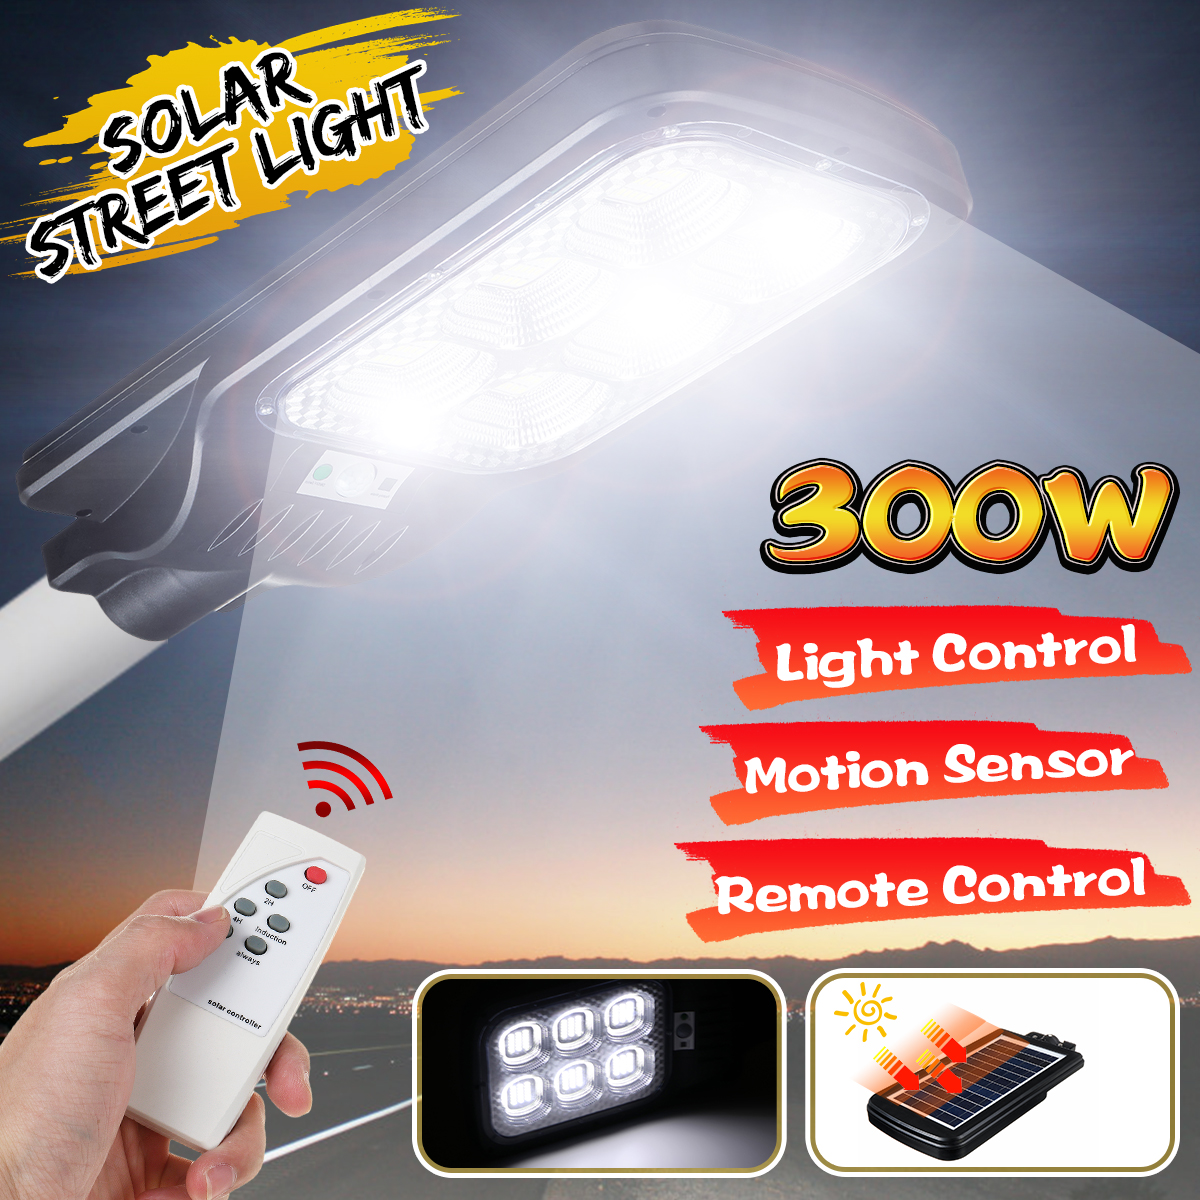 Solar-Street-Light-108LED-360W-Button-Control-Light-Control-Timing-Control-Remote-Control-PIR-Motion-1638819-3